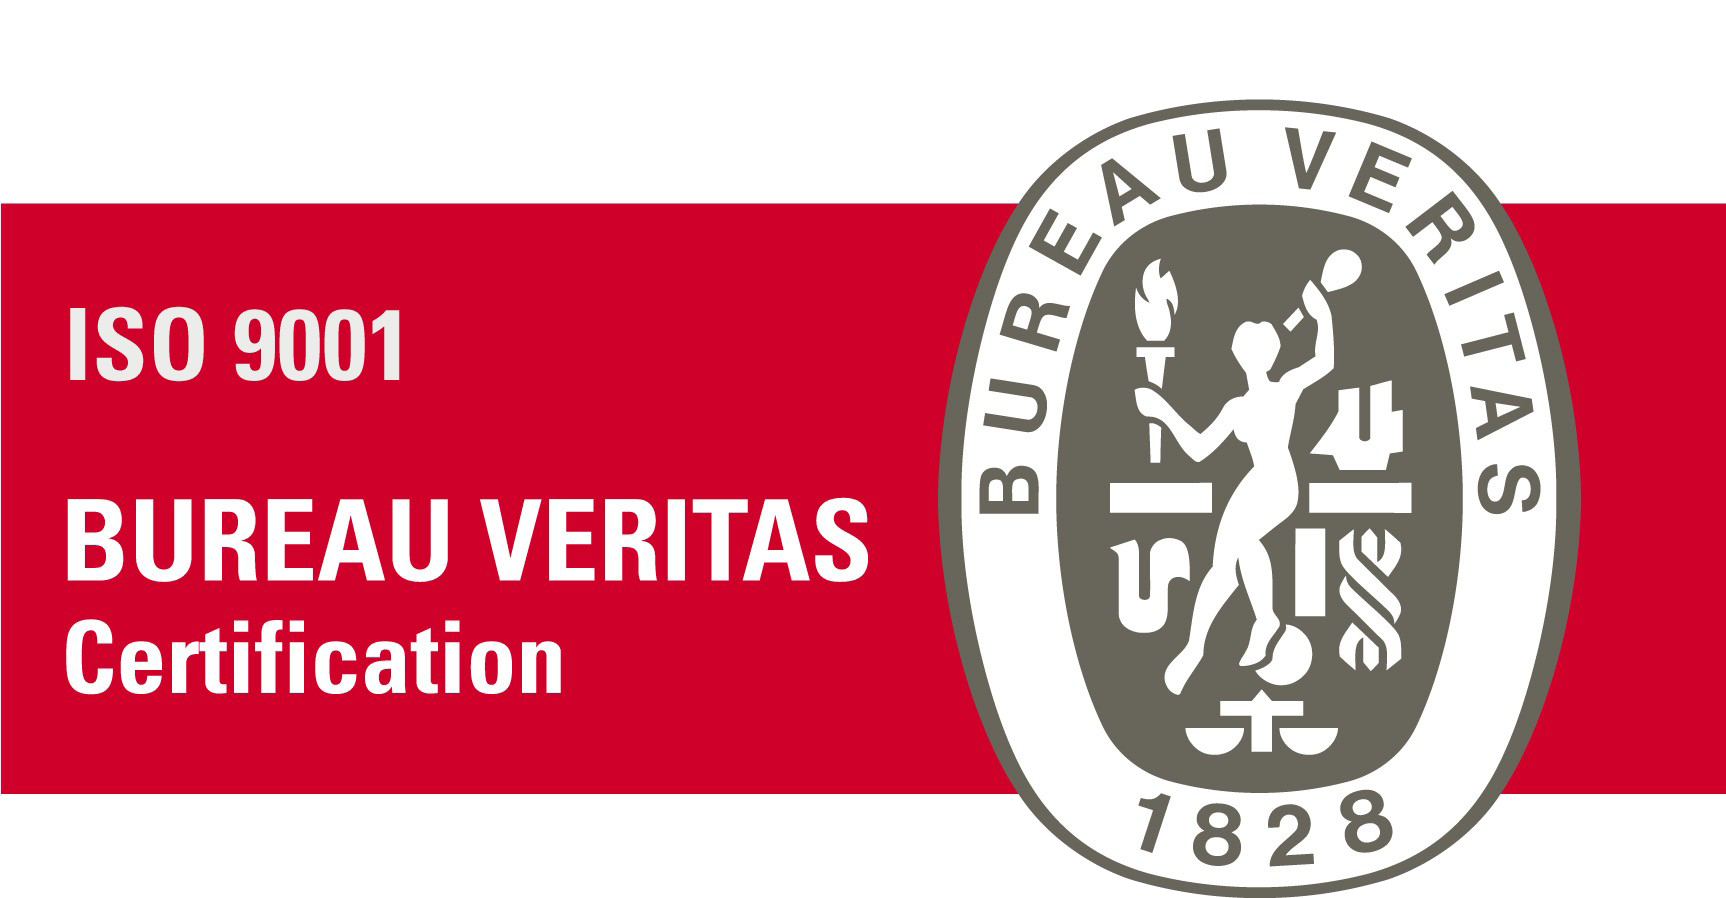 Bureau Veritas ISO 9001 certification badge